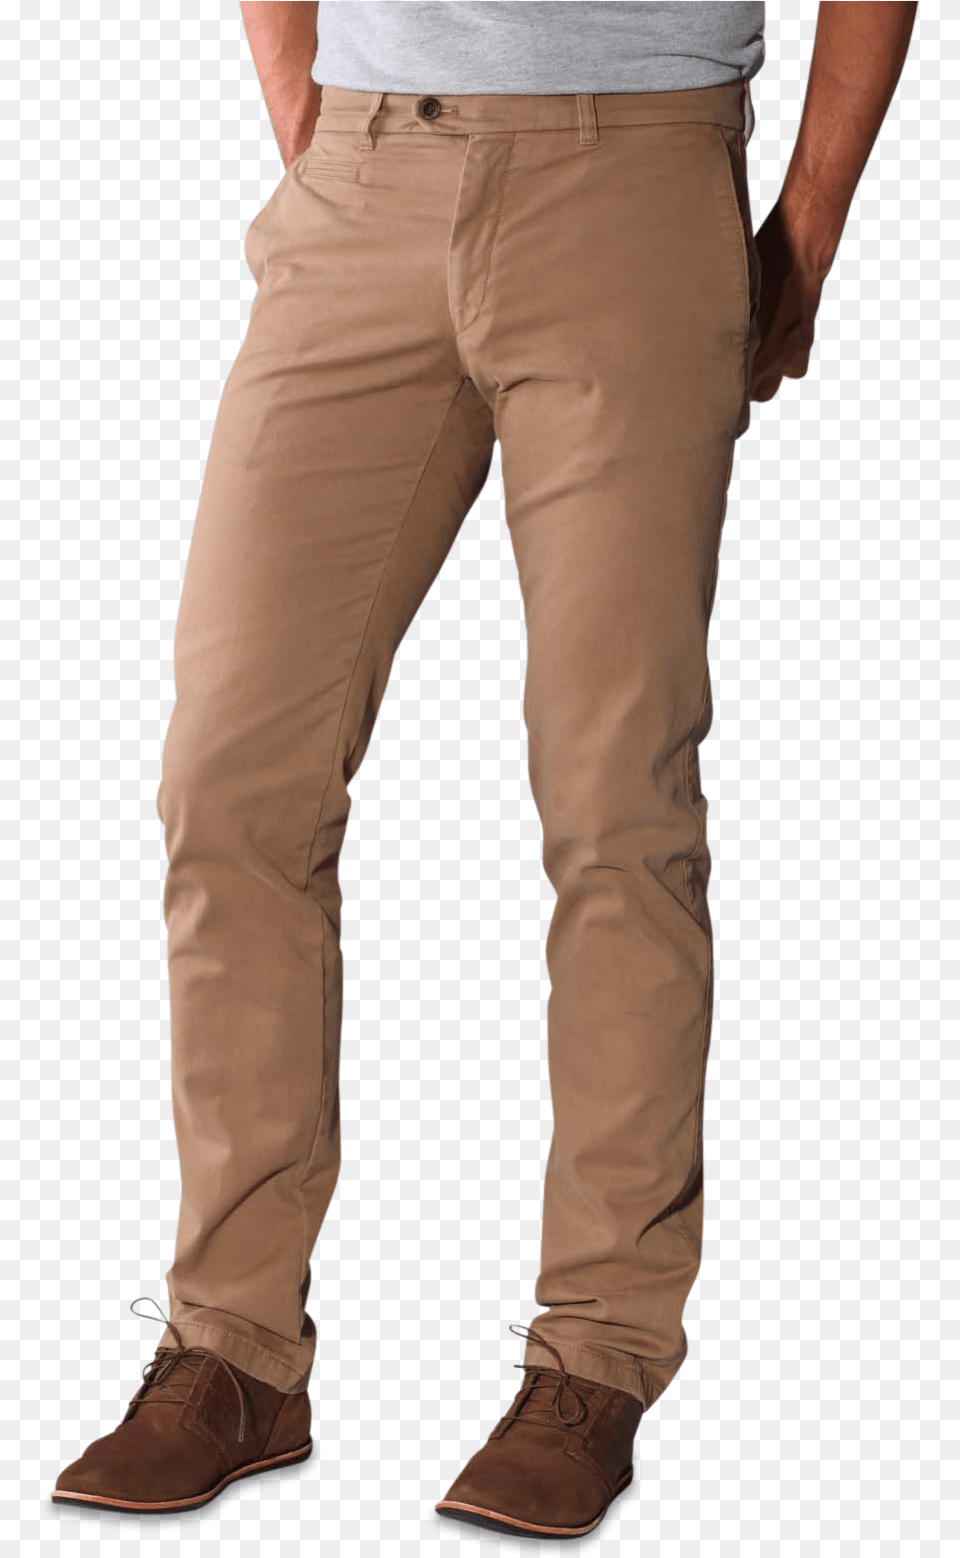 Pants Jeans Khaki Toffee Gratis Pocket, Clothing, Adult, Male, Man Png